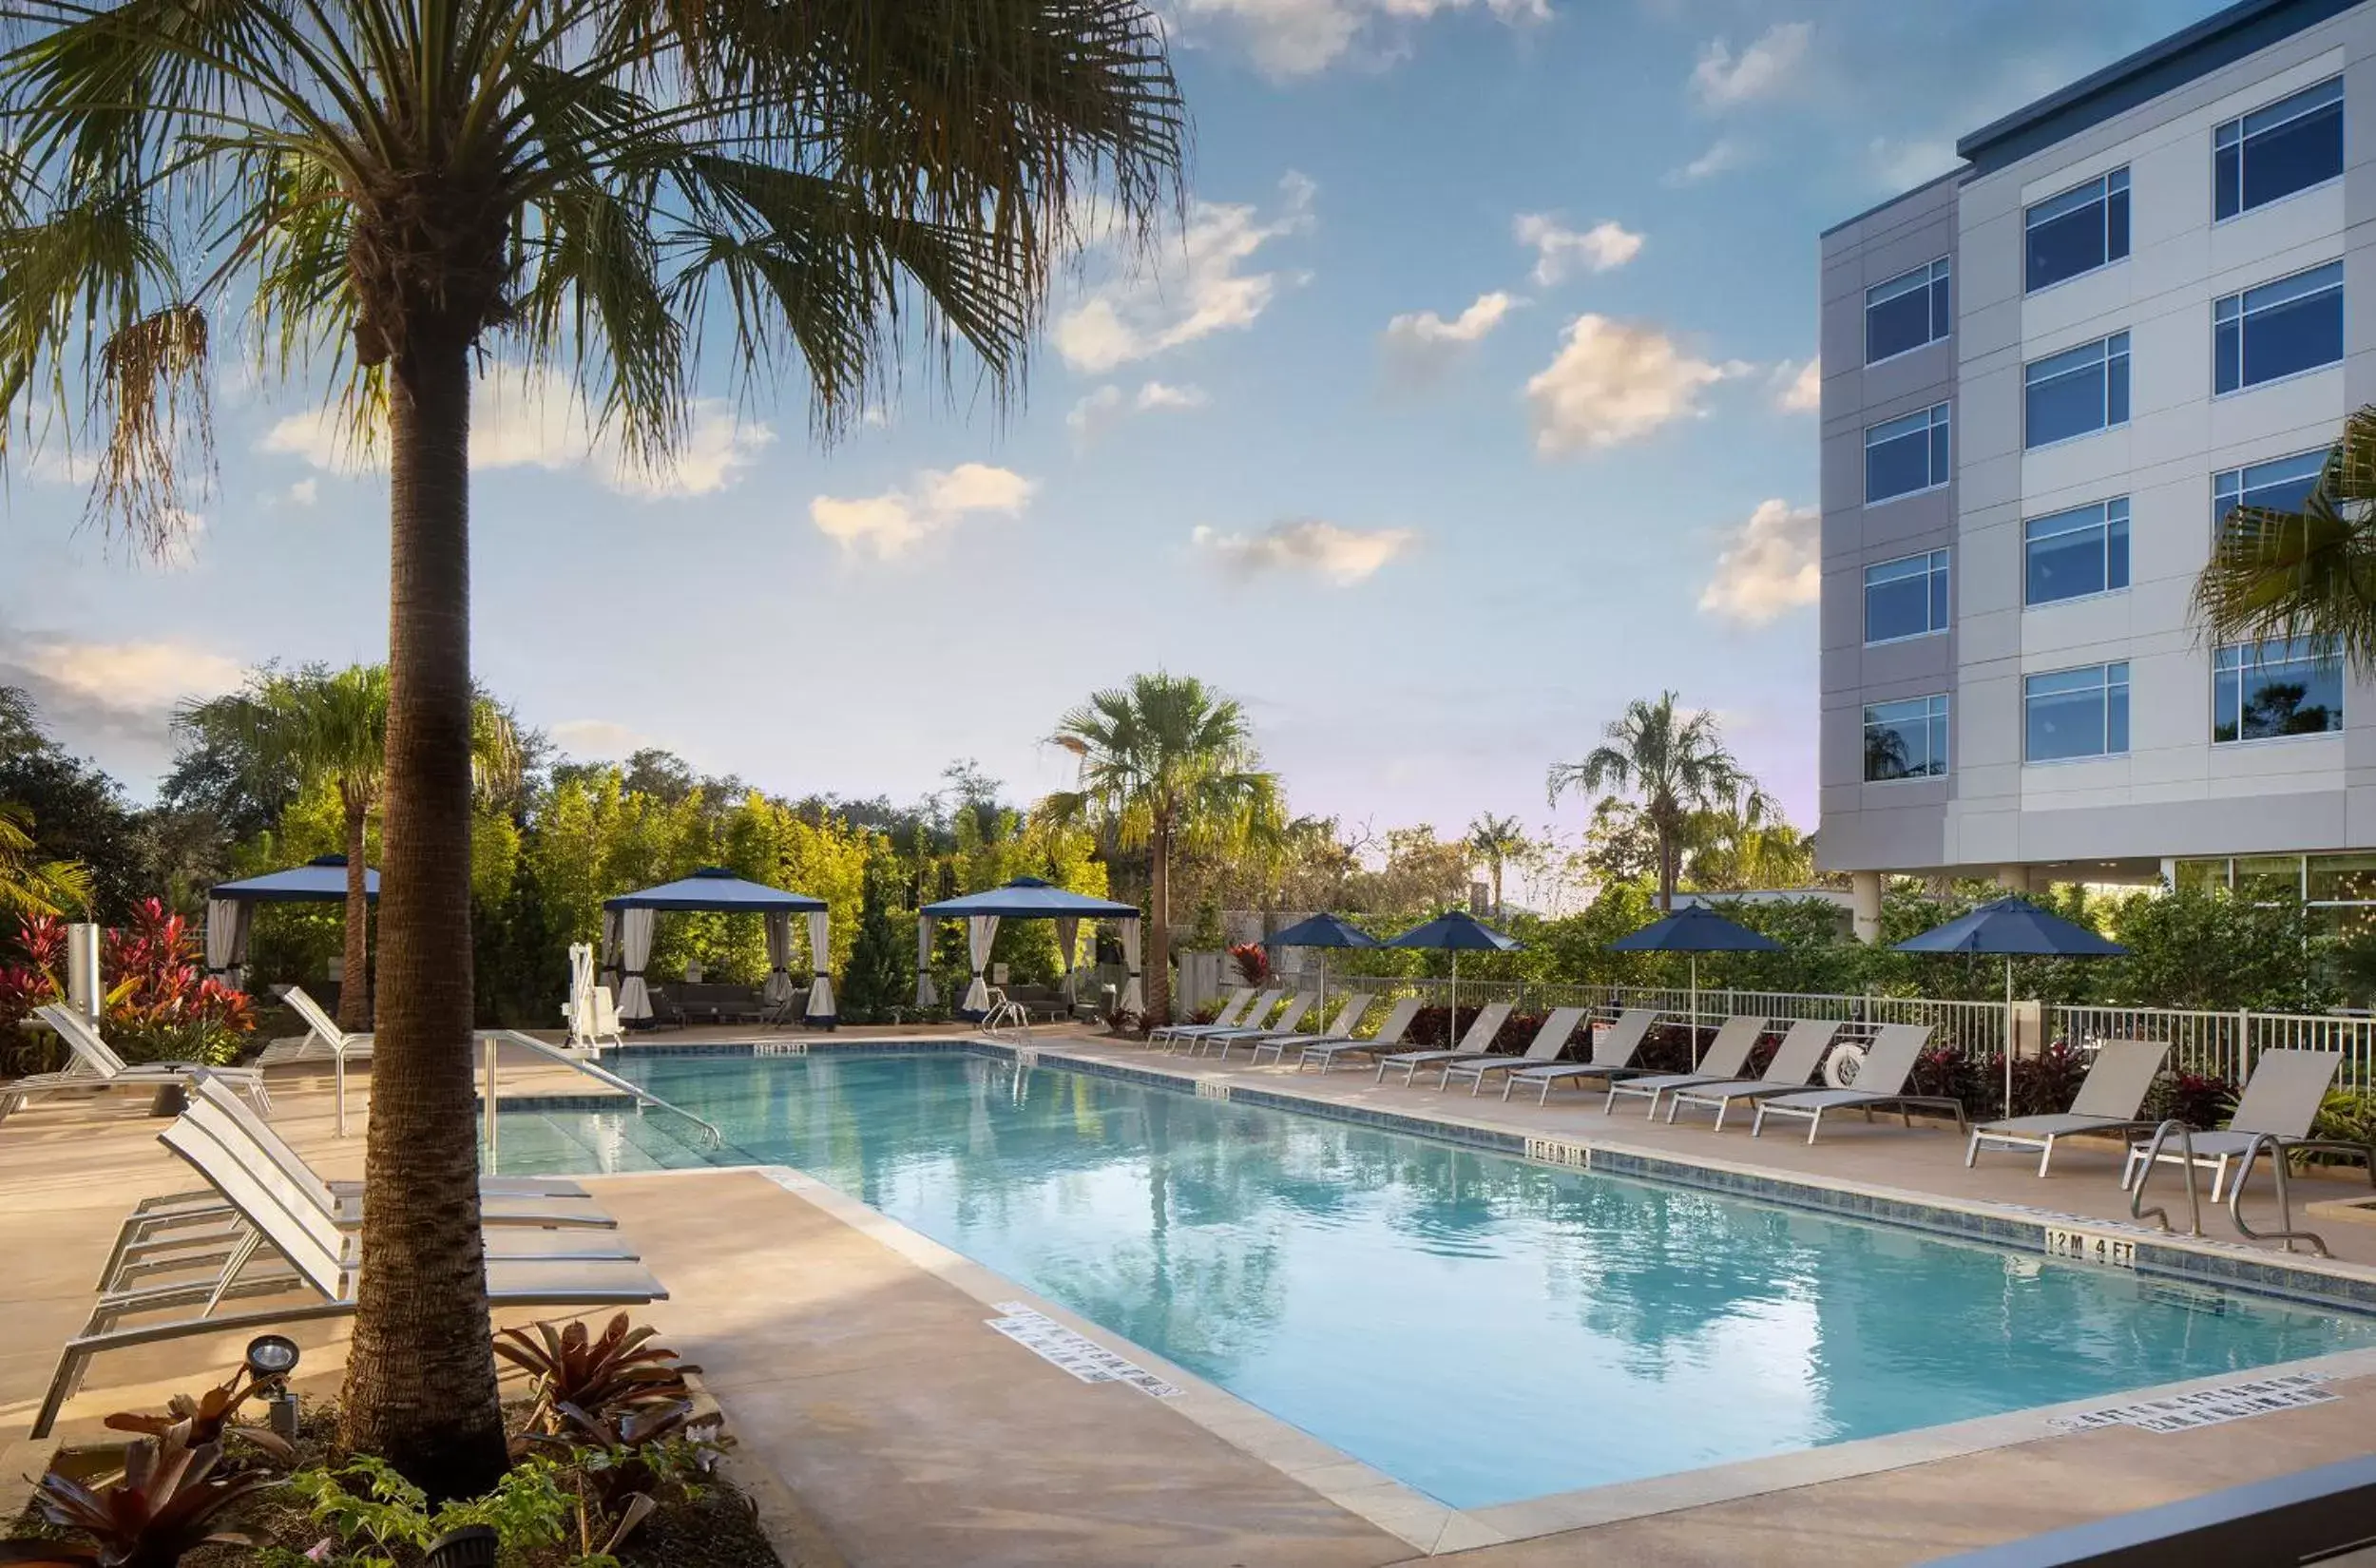 Property building, Swimming Pool in The Celeste Hotel, Orlando, a Tribute Portfolio Hotel